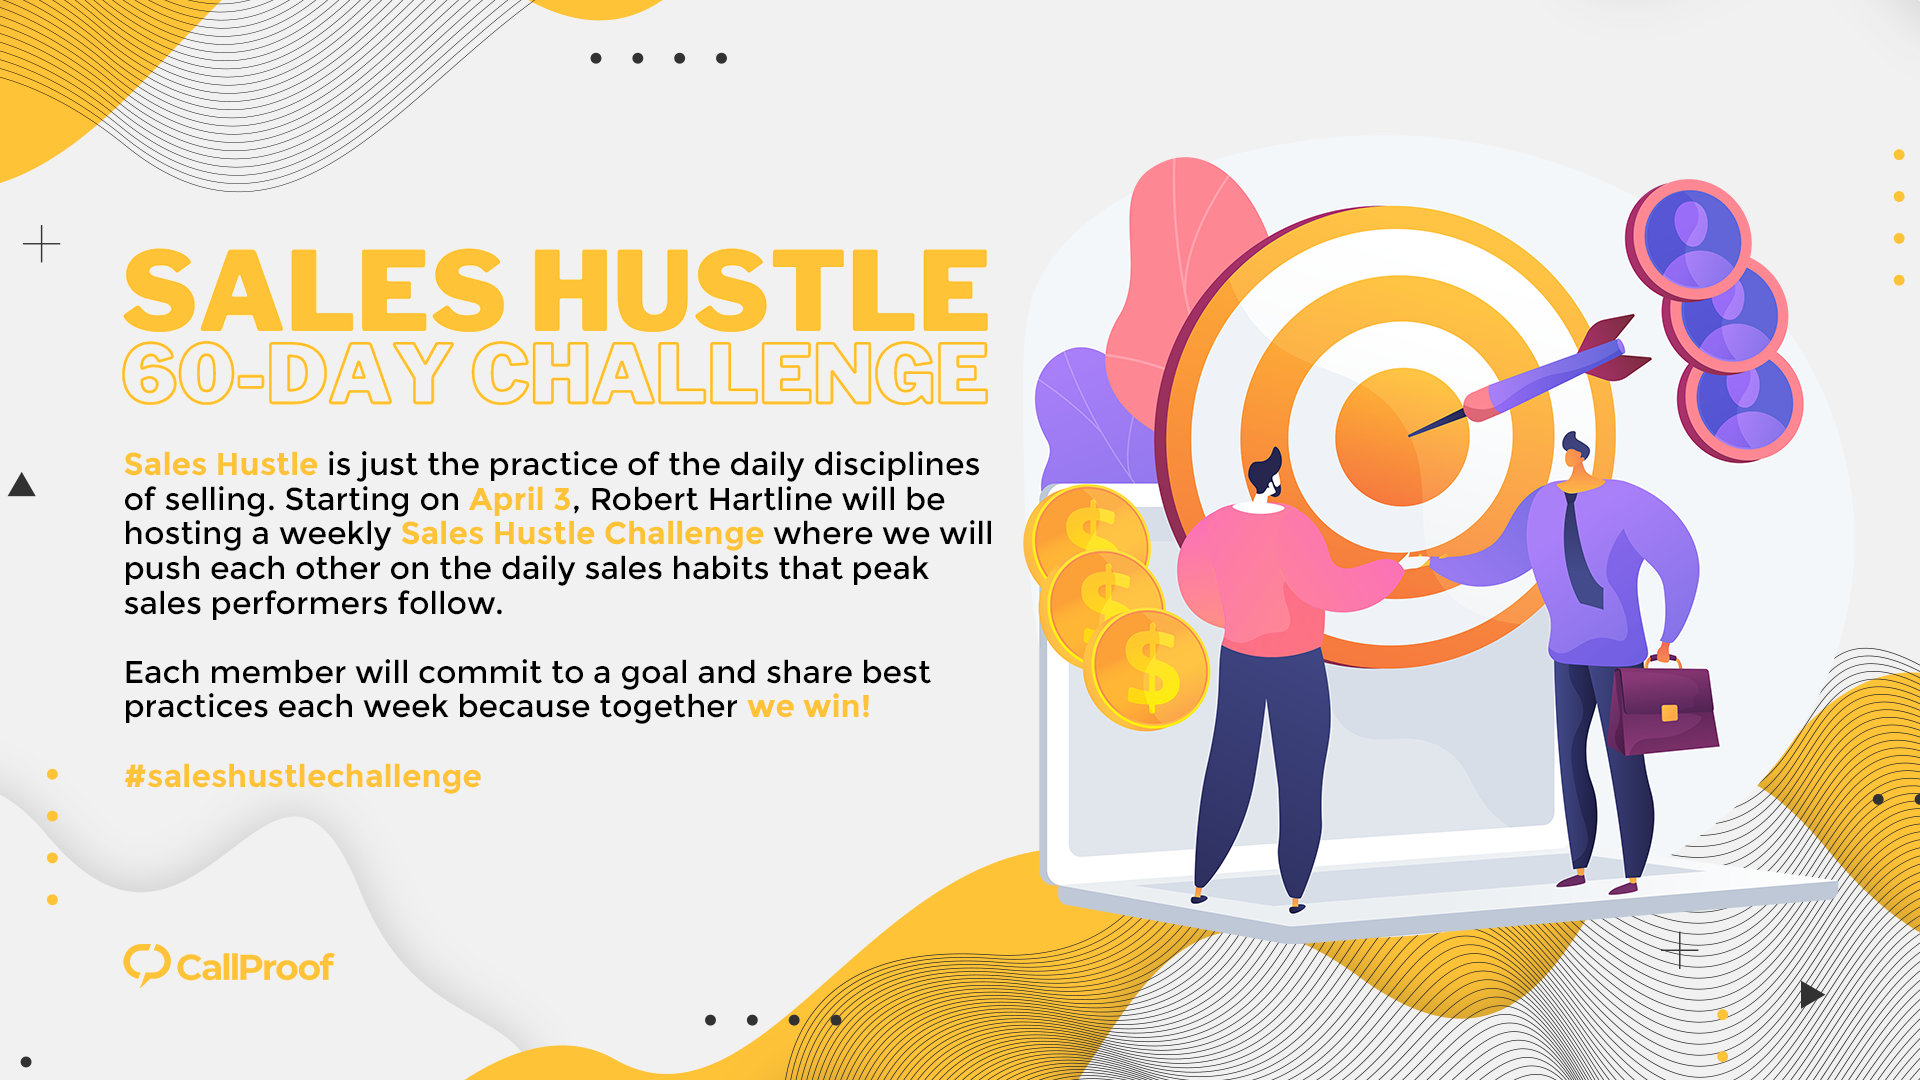 Sales Hustle 60day Challenge